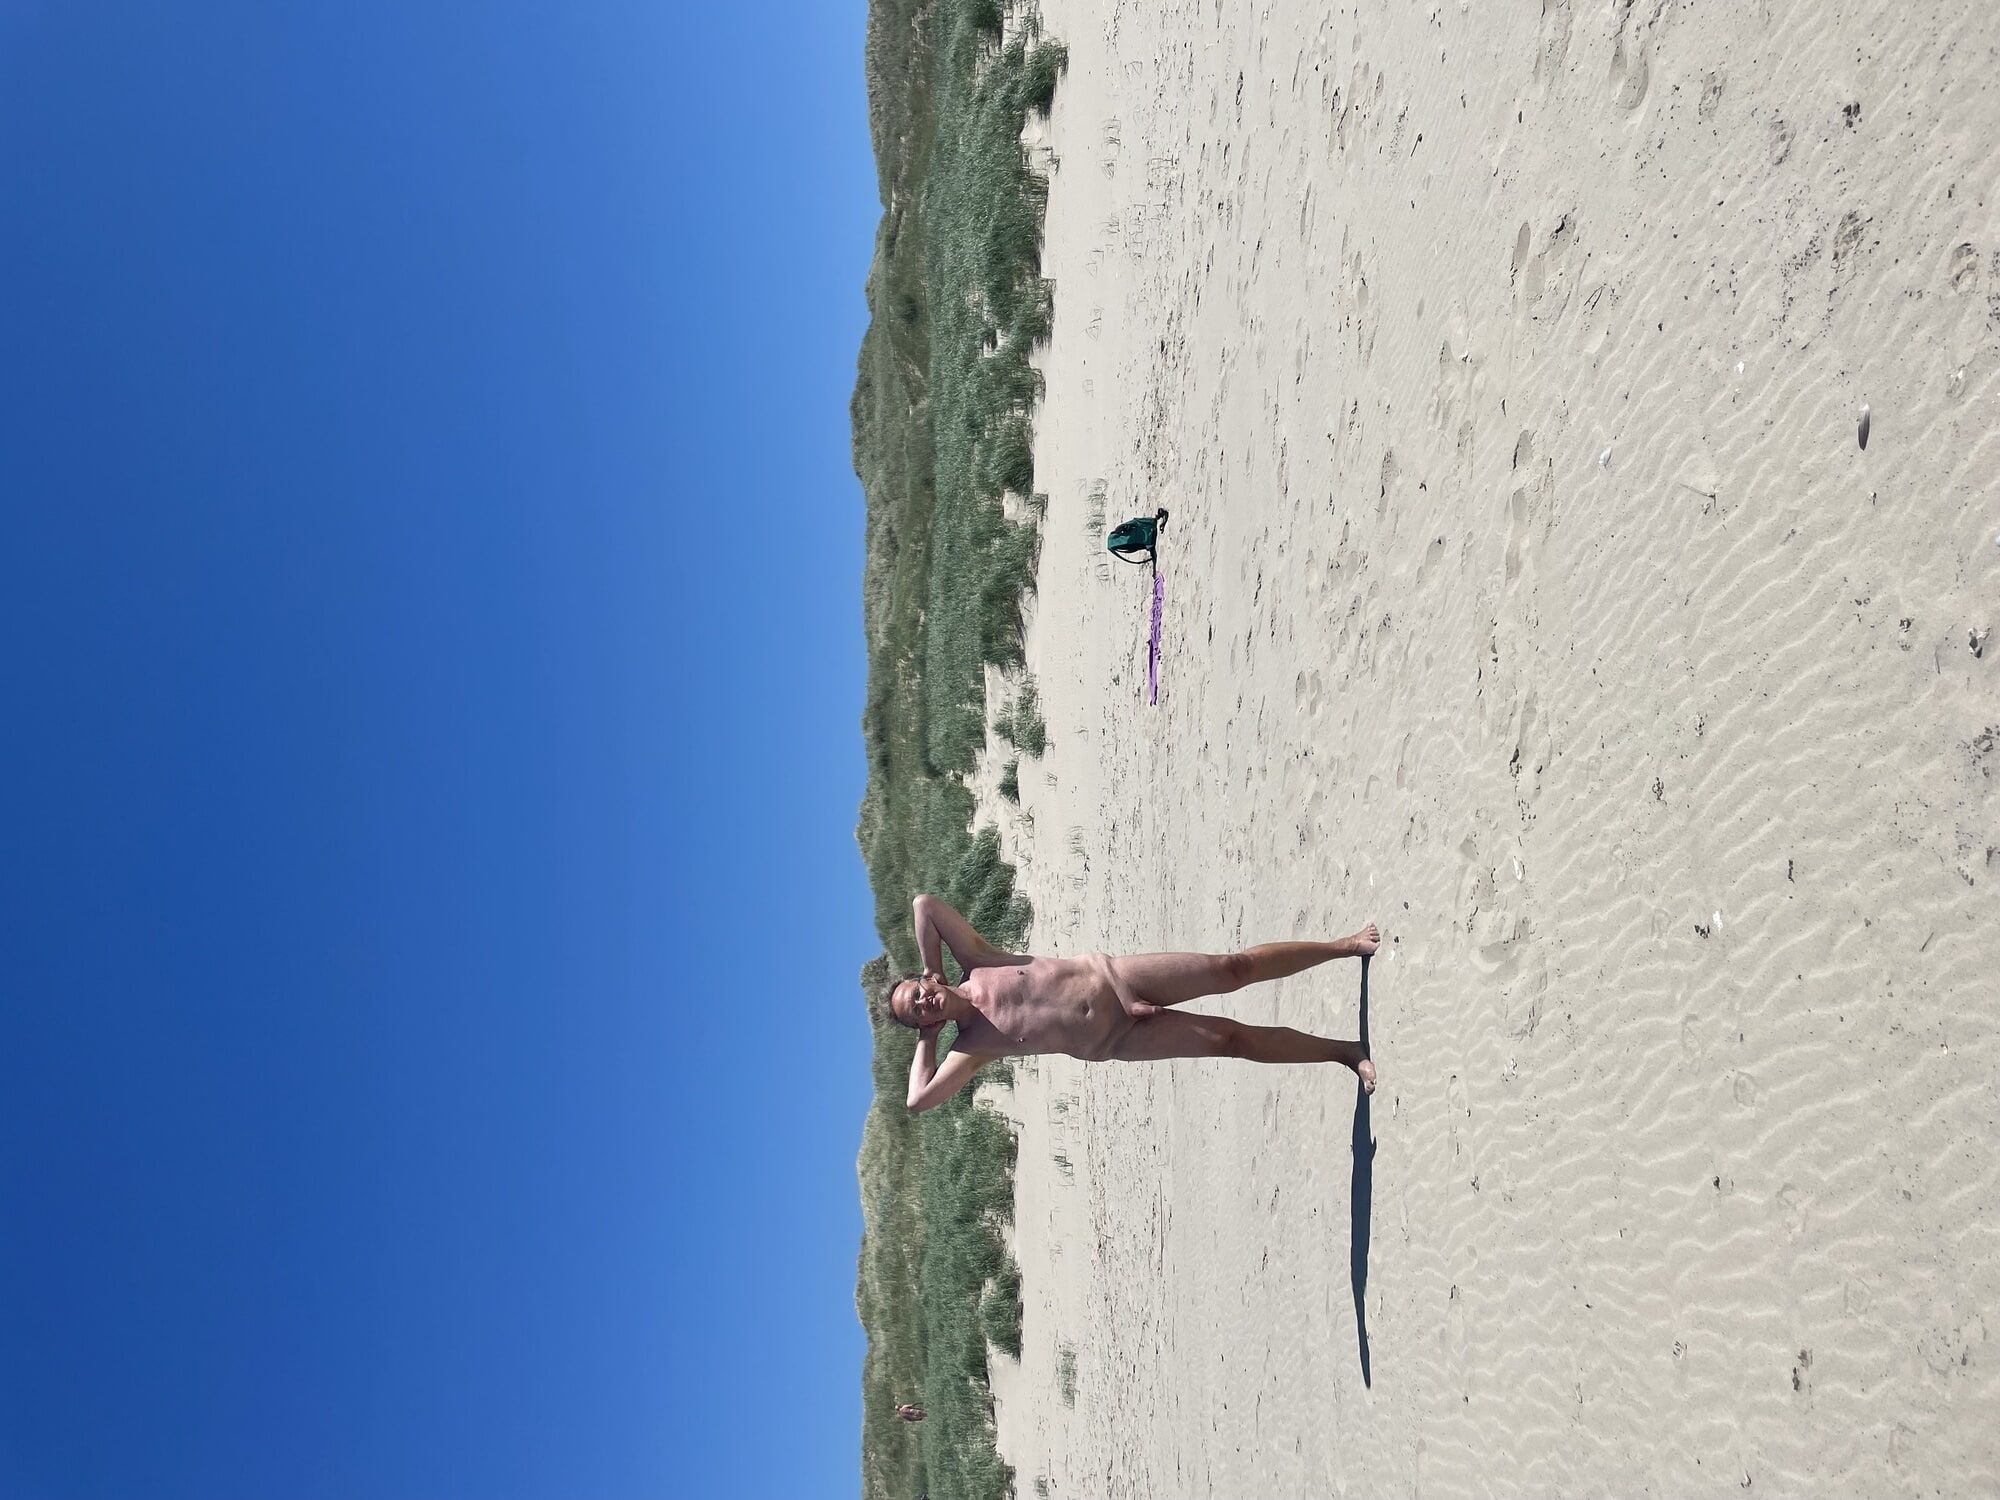 Nude beach and nude hiking #2